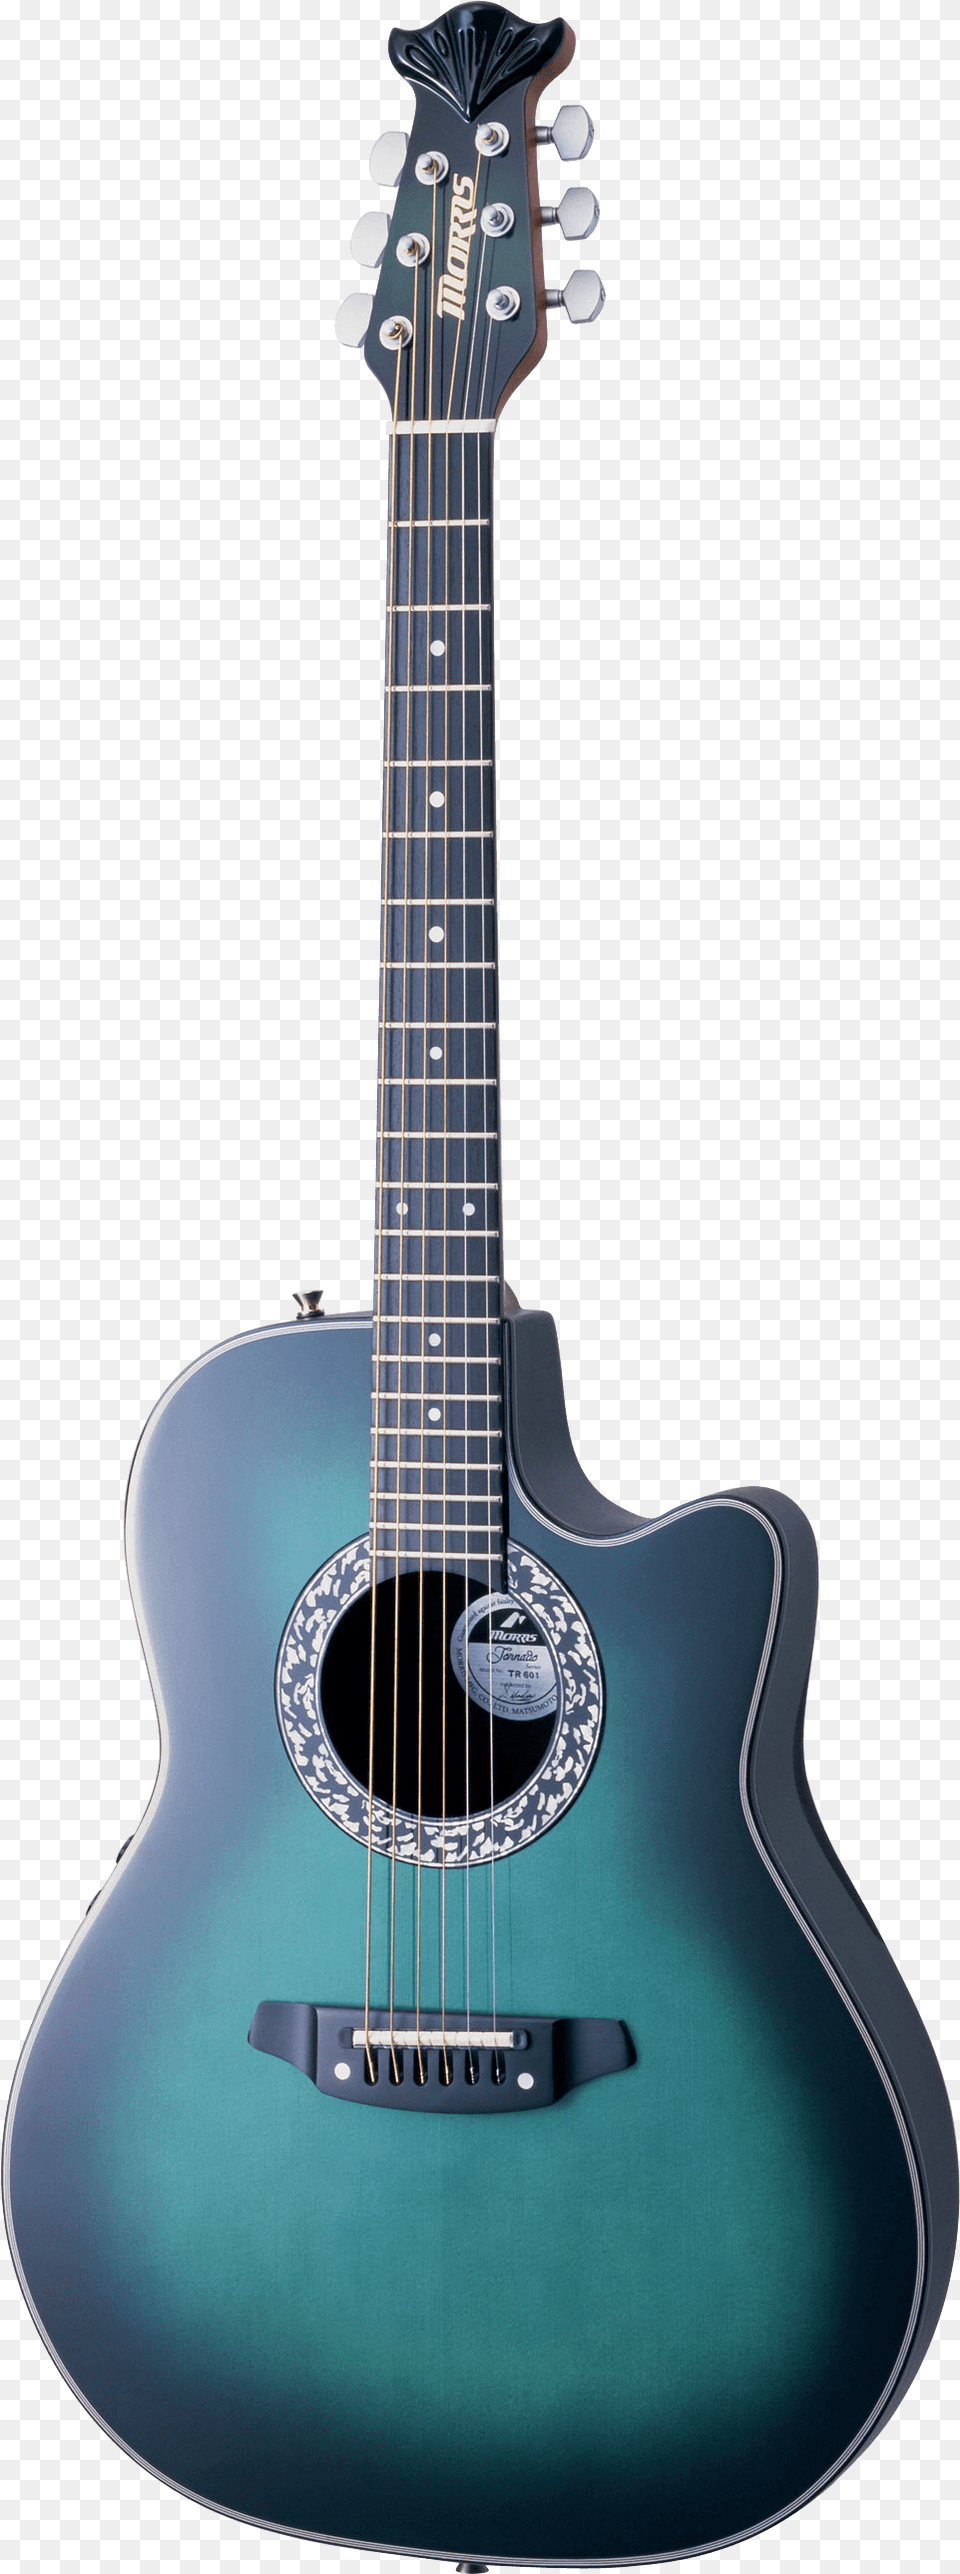 Acoustic Guitar Guitar, Musical Instrument, Bass Guitar Free Transparent Png